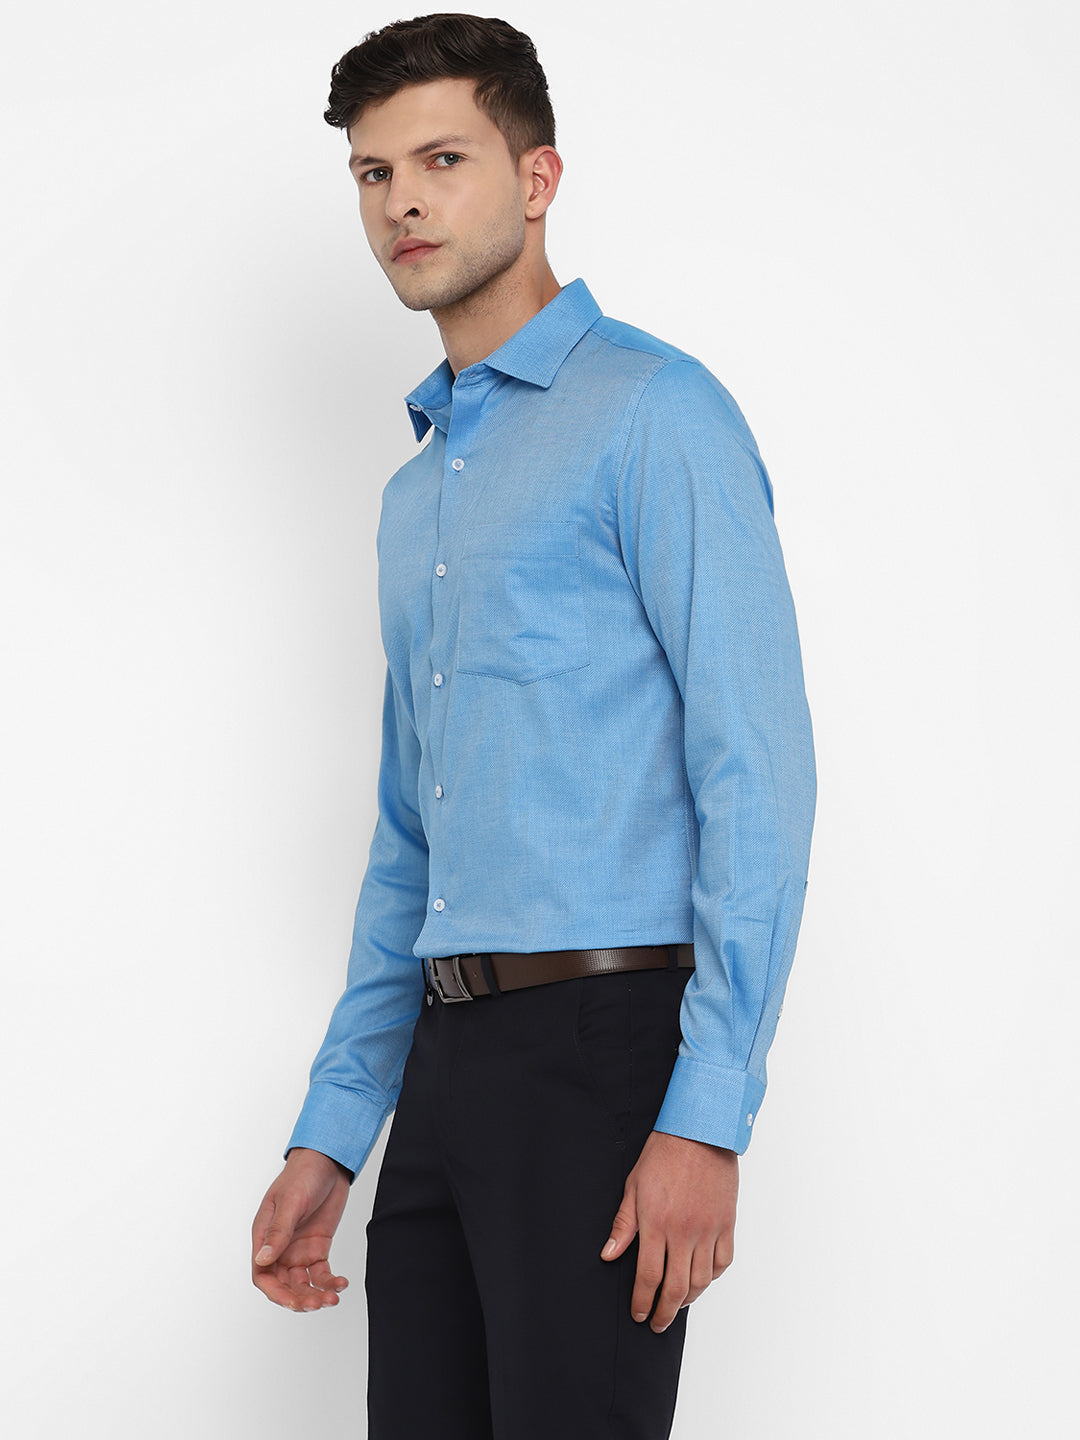 Blue Cotton Self Design Slim Fit Shirts